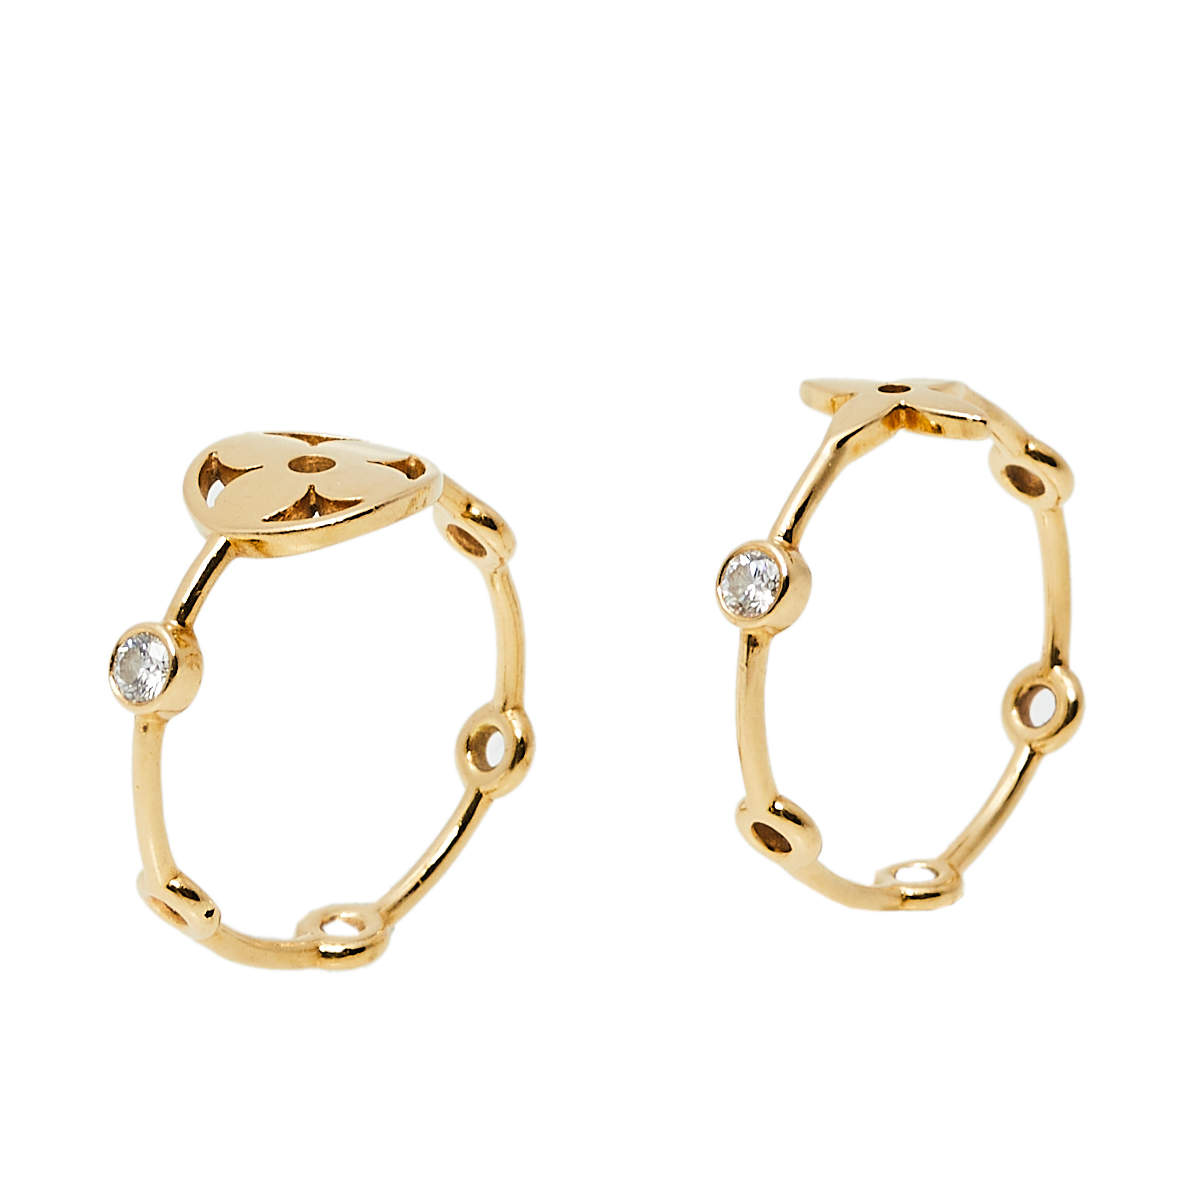 Louis Vuitton Idylle Blossom Diamond Earring in 18k Yellow Gold